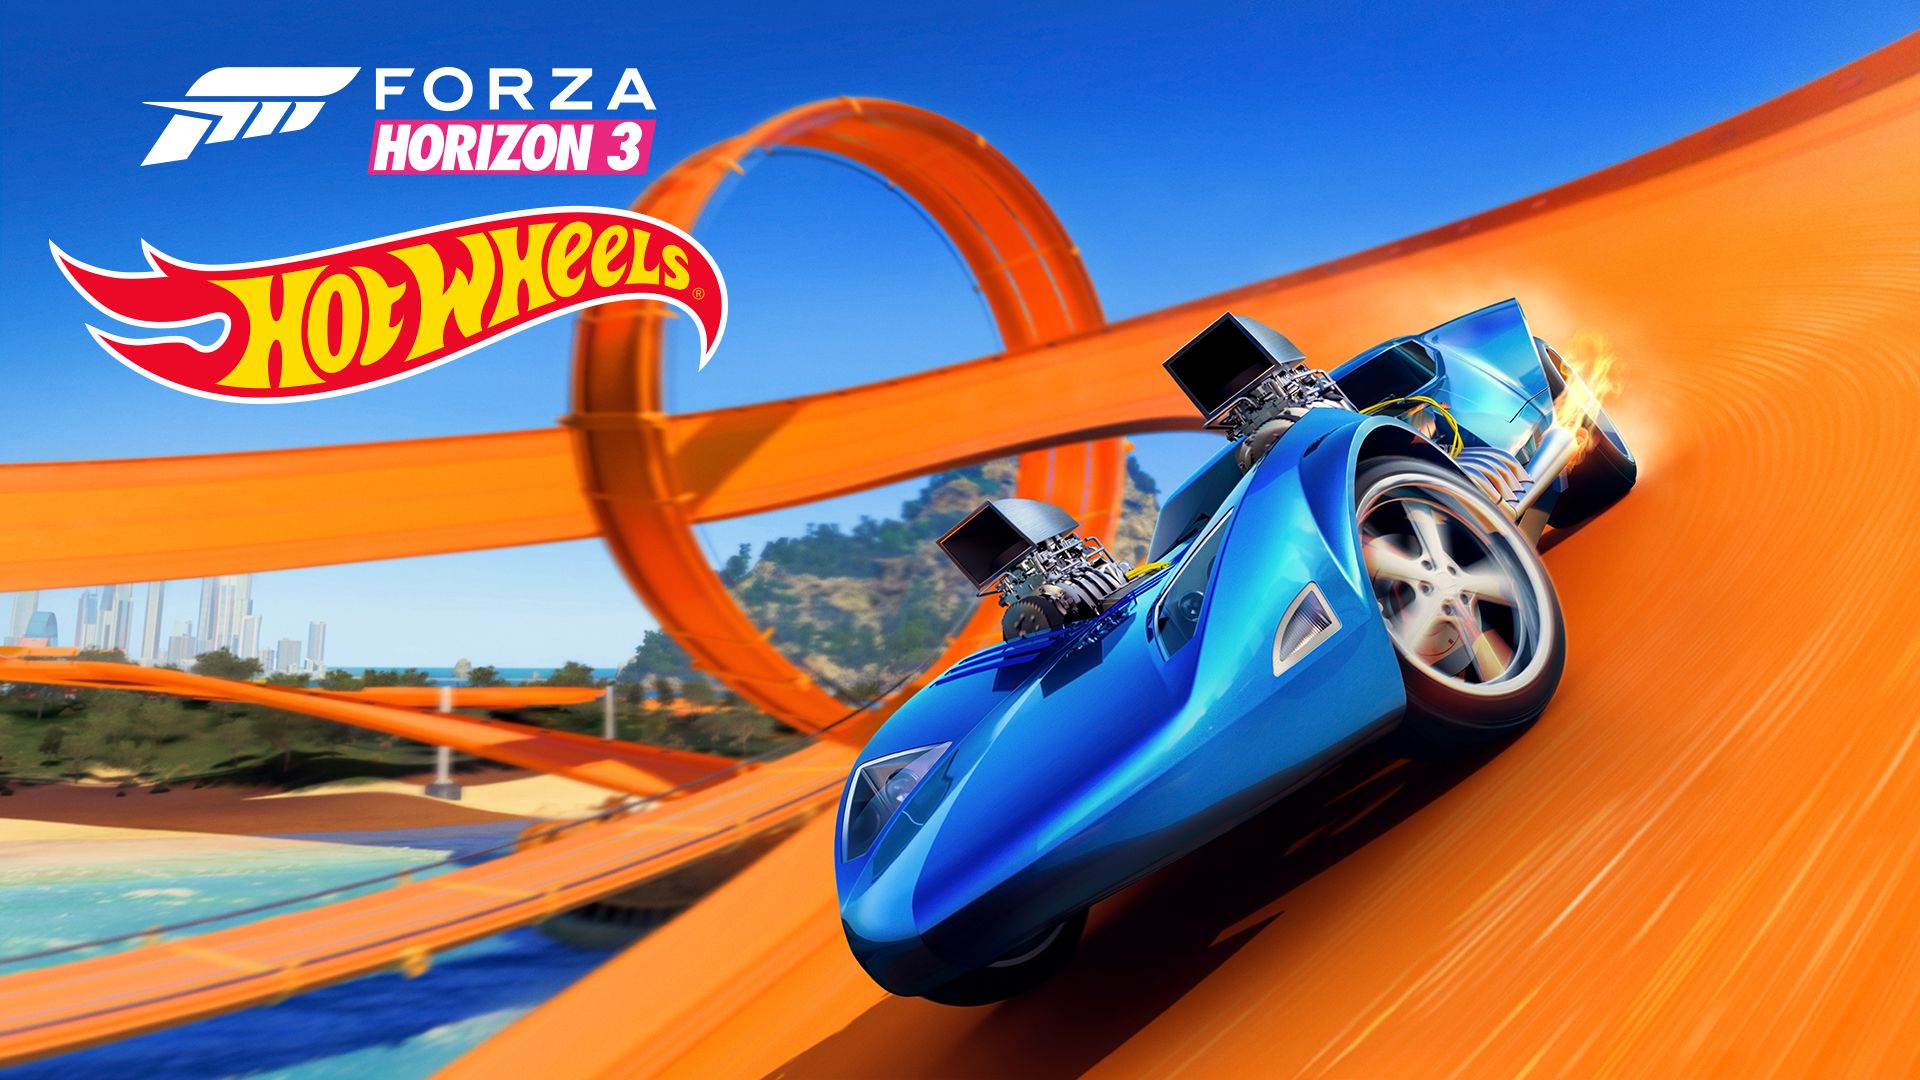 Forza Horizon 3 Hot Wheels Expansion arrives May 9